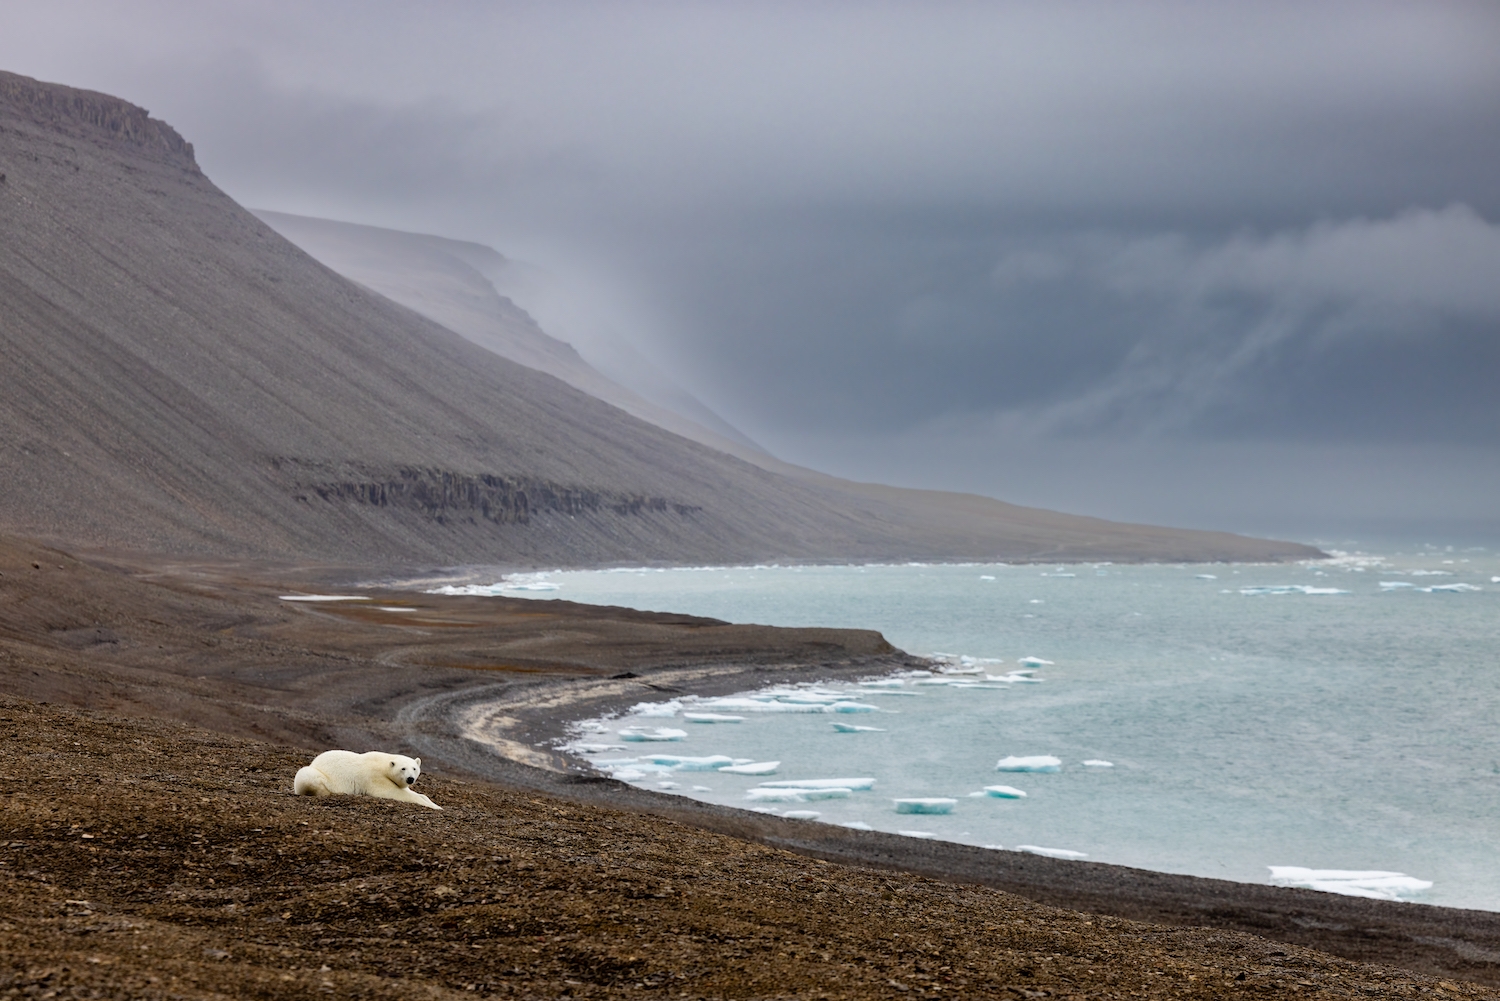 A polar bear resting on the coastline of the Northwest Passage